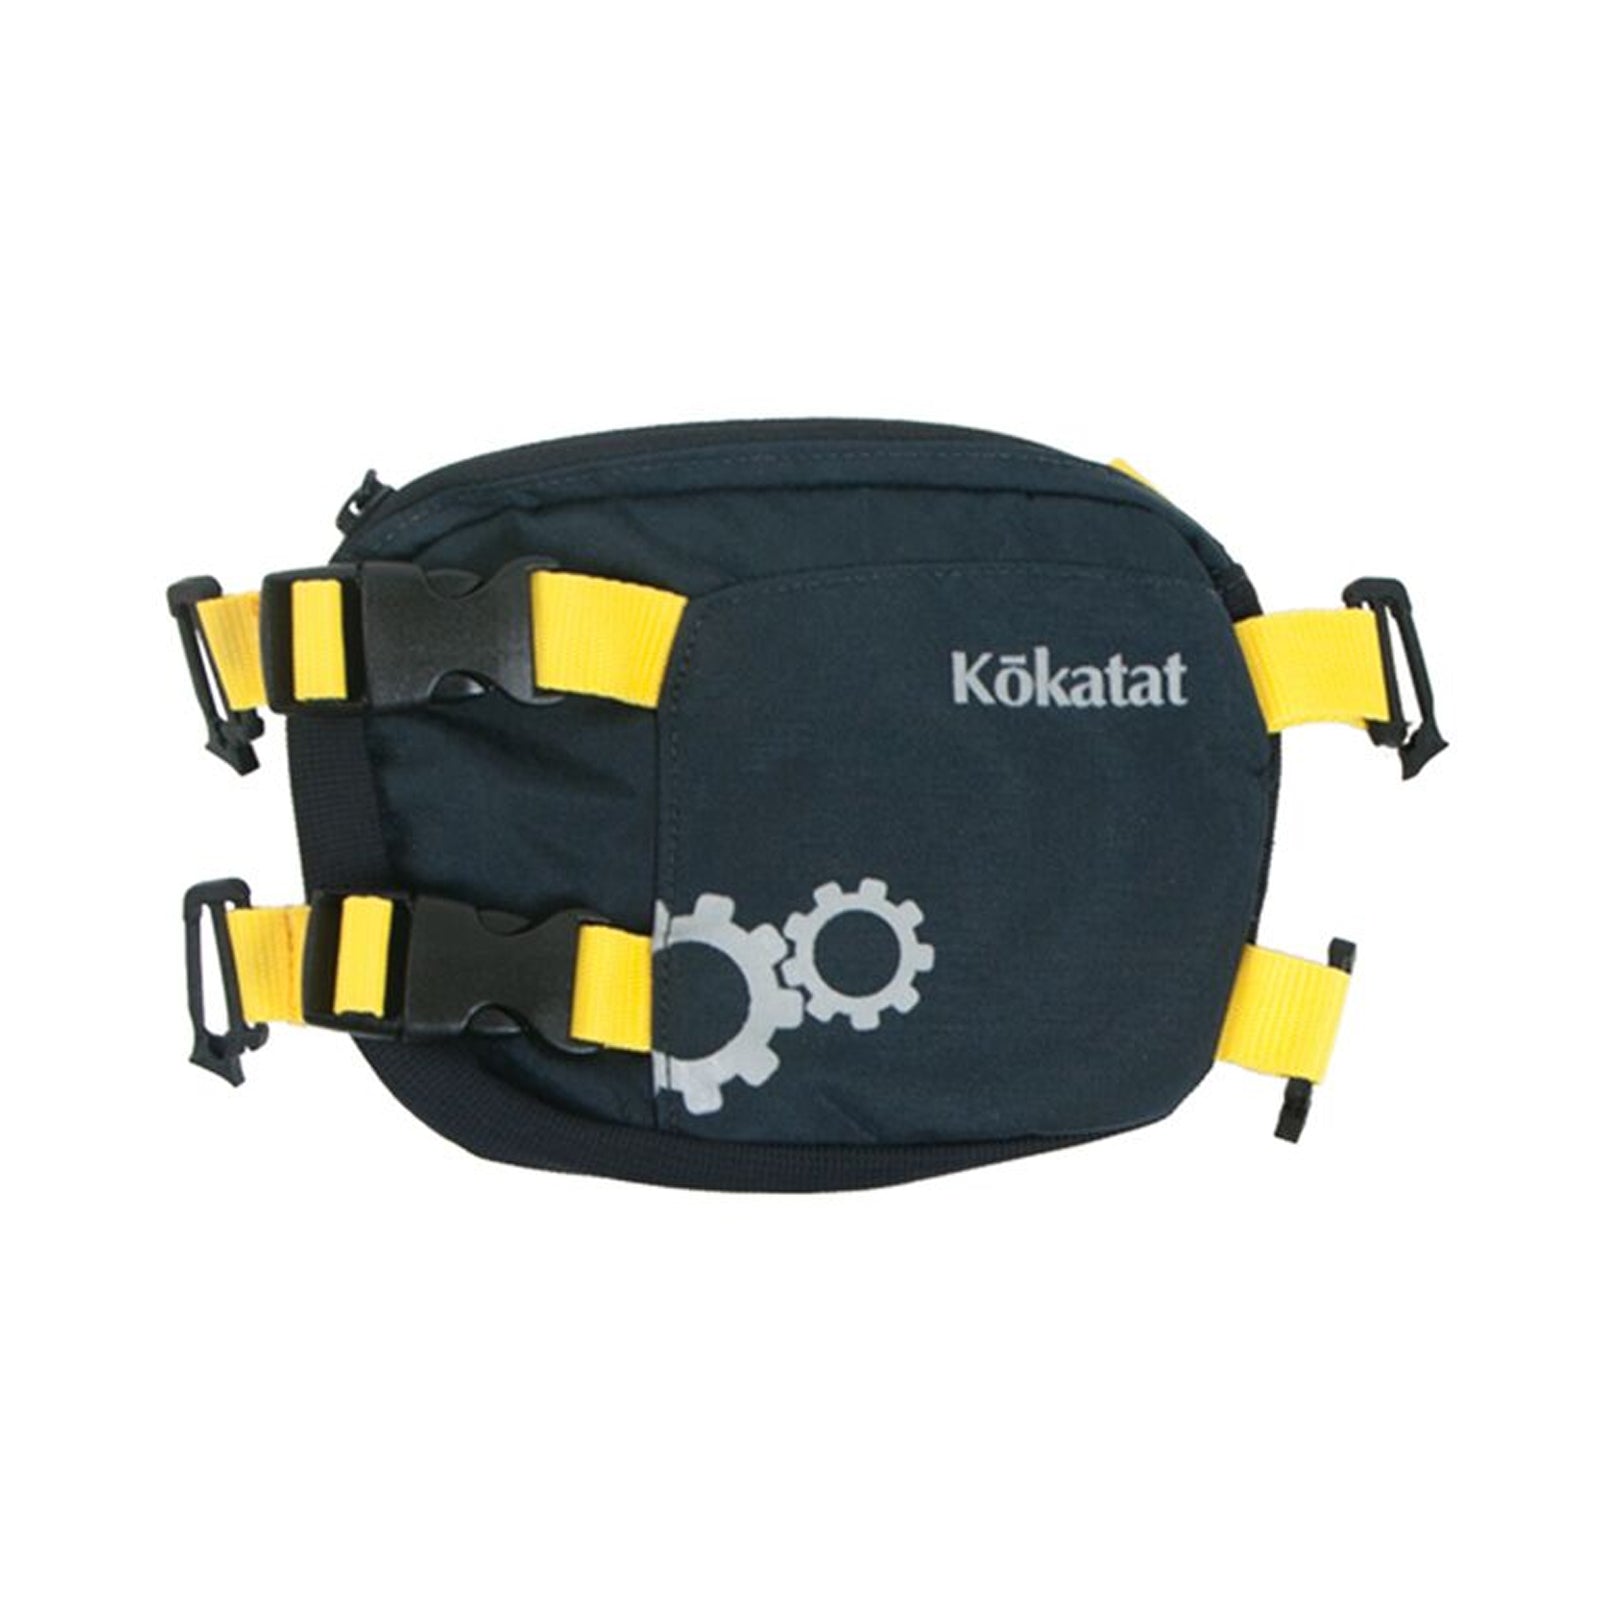 Kokatat Belly Pocket